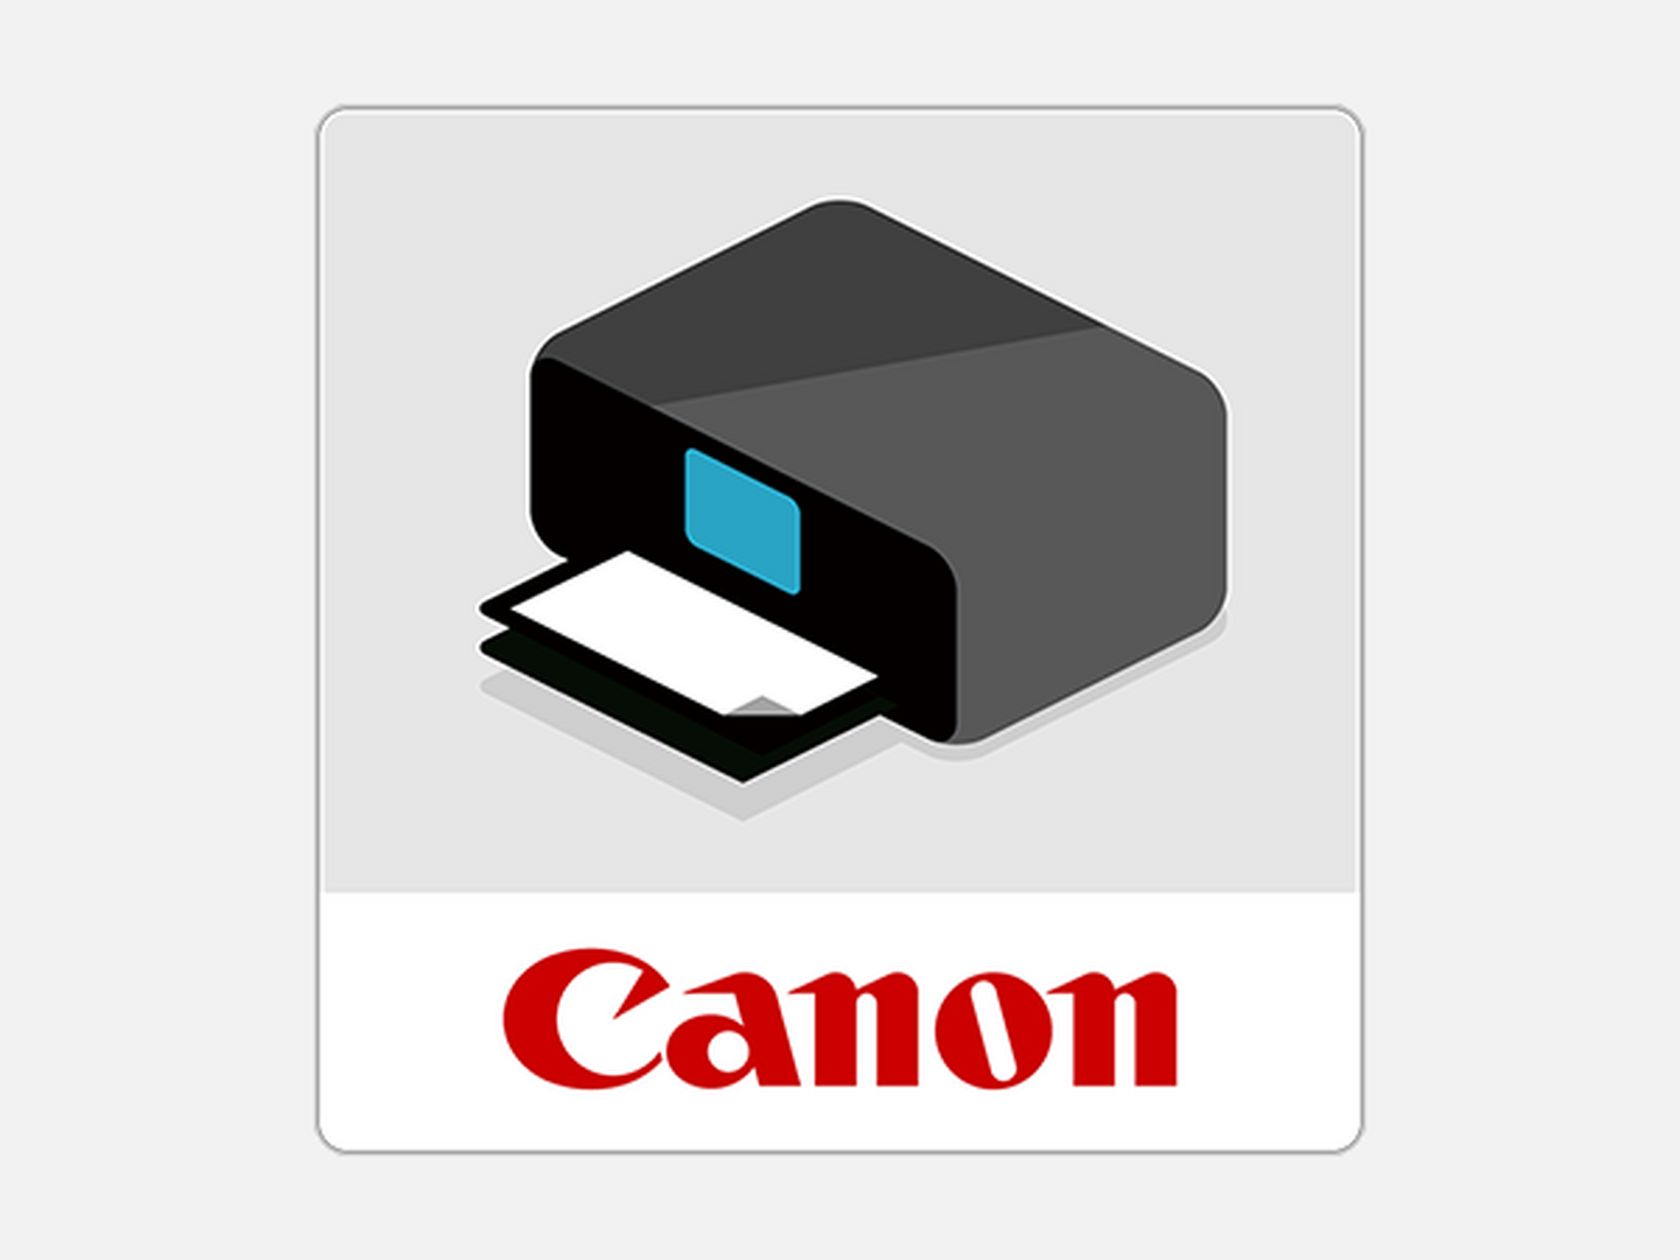 Canon Pixma TS3350 Multifunction Printer Black